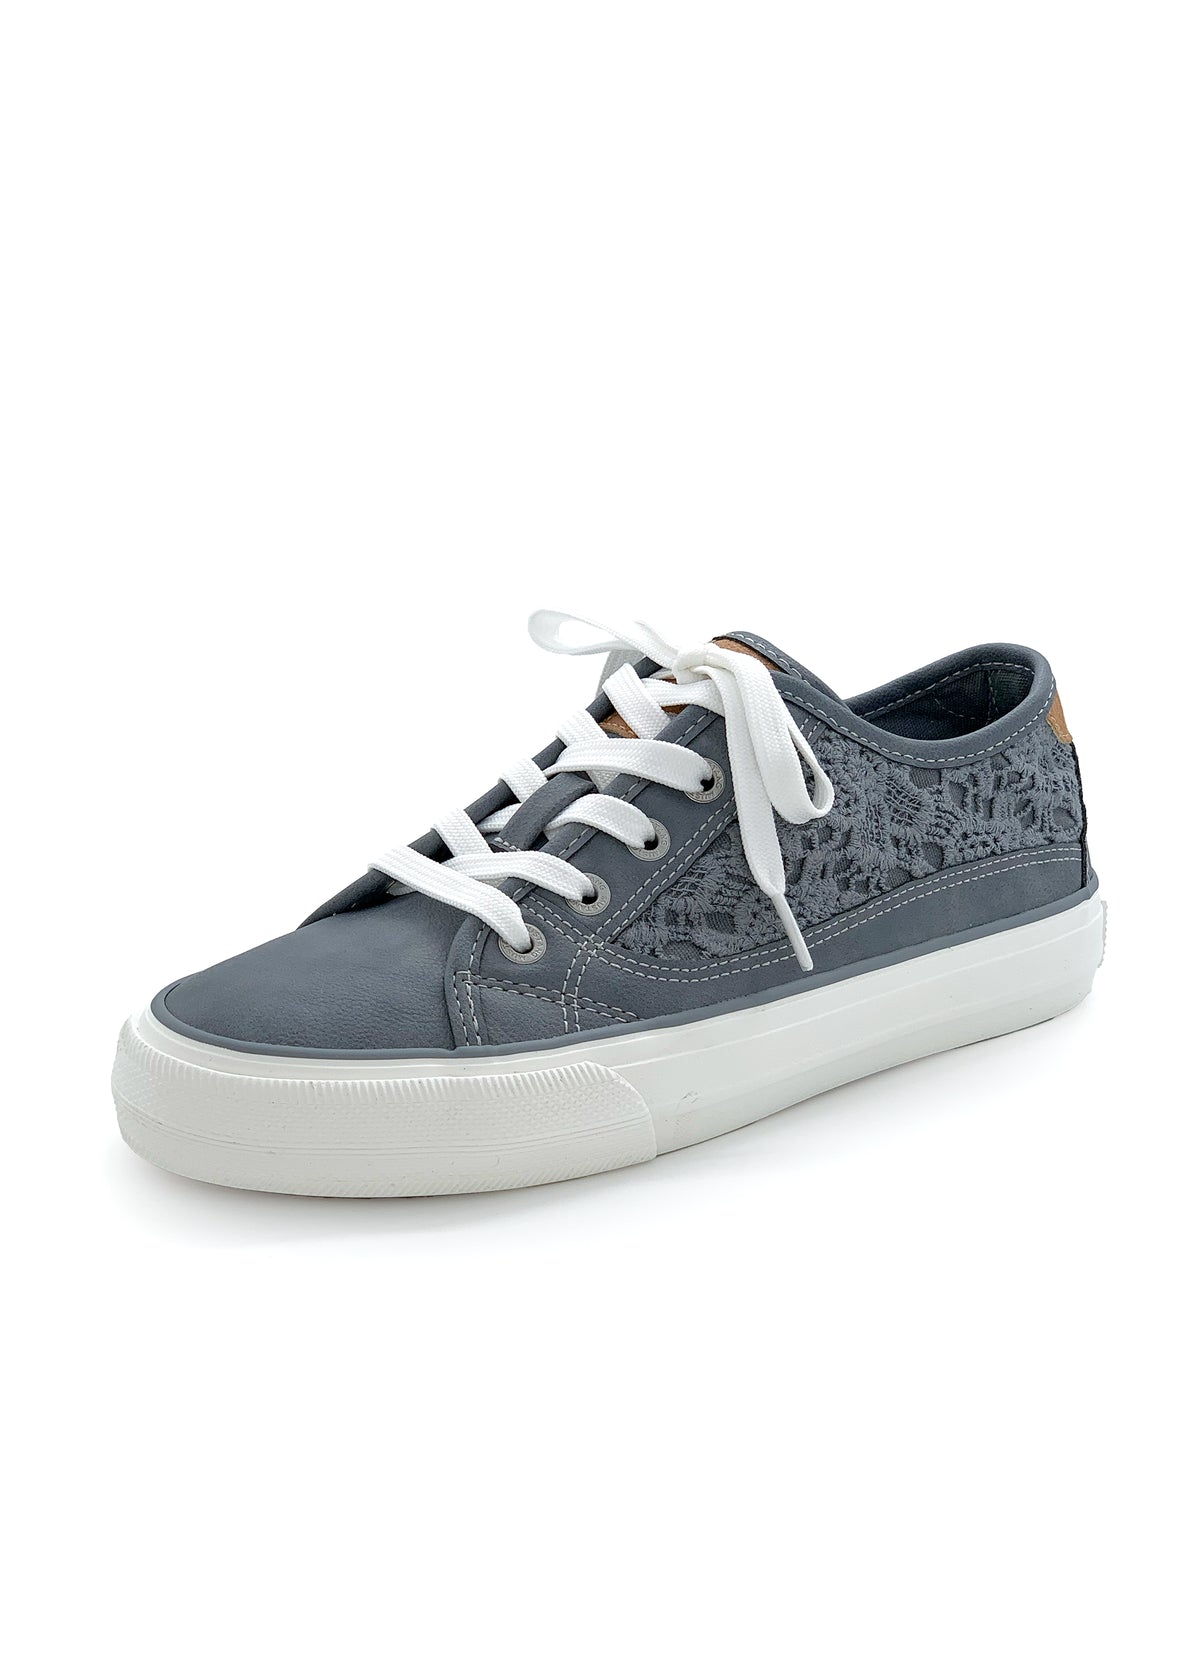 Lace sneakers - blue-grey, vegan